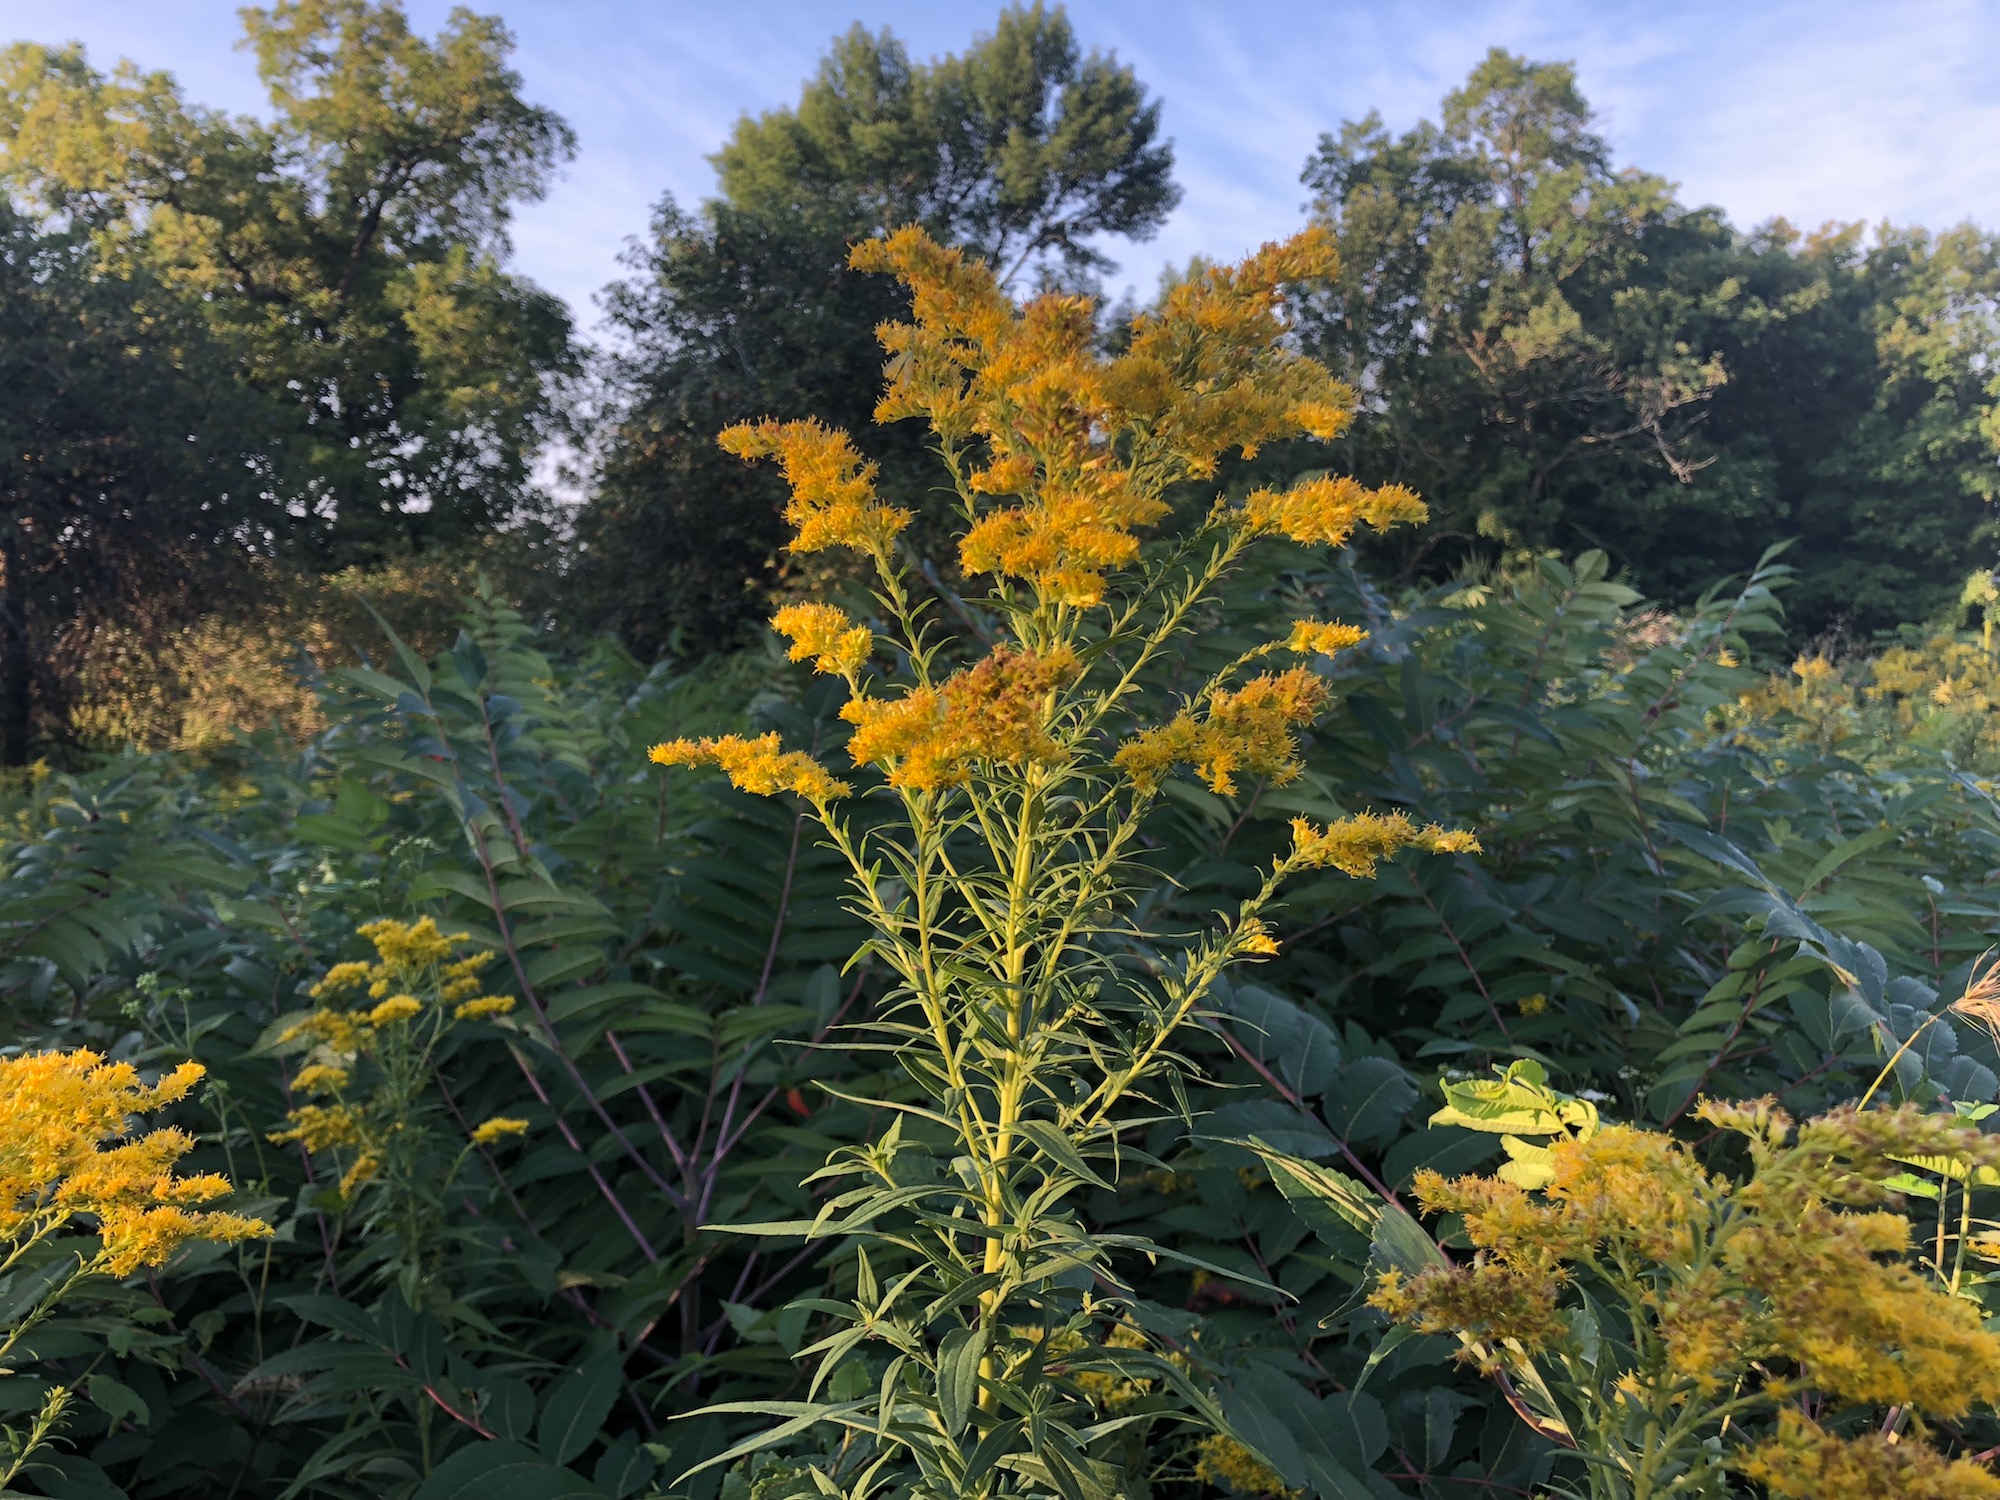 Goldenrod in UW Arboretum Oak Savanna on August 31, 2018.